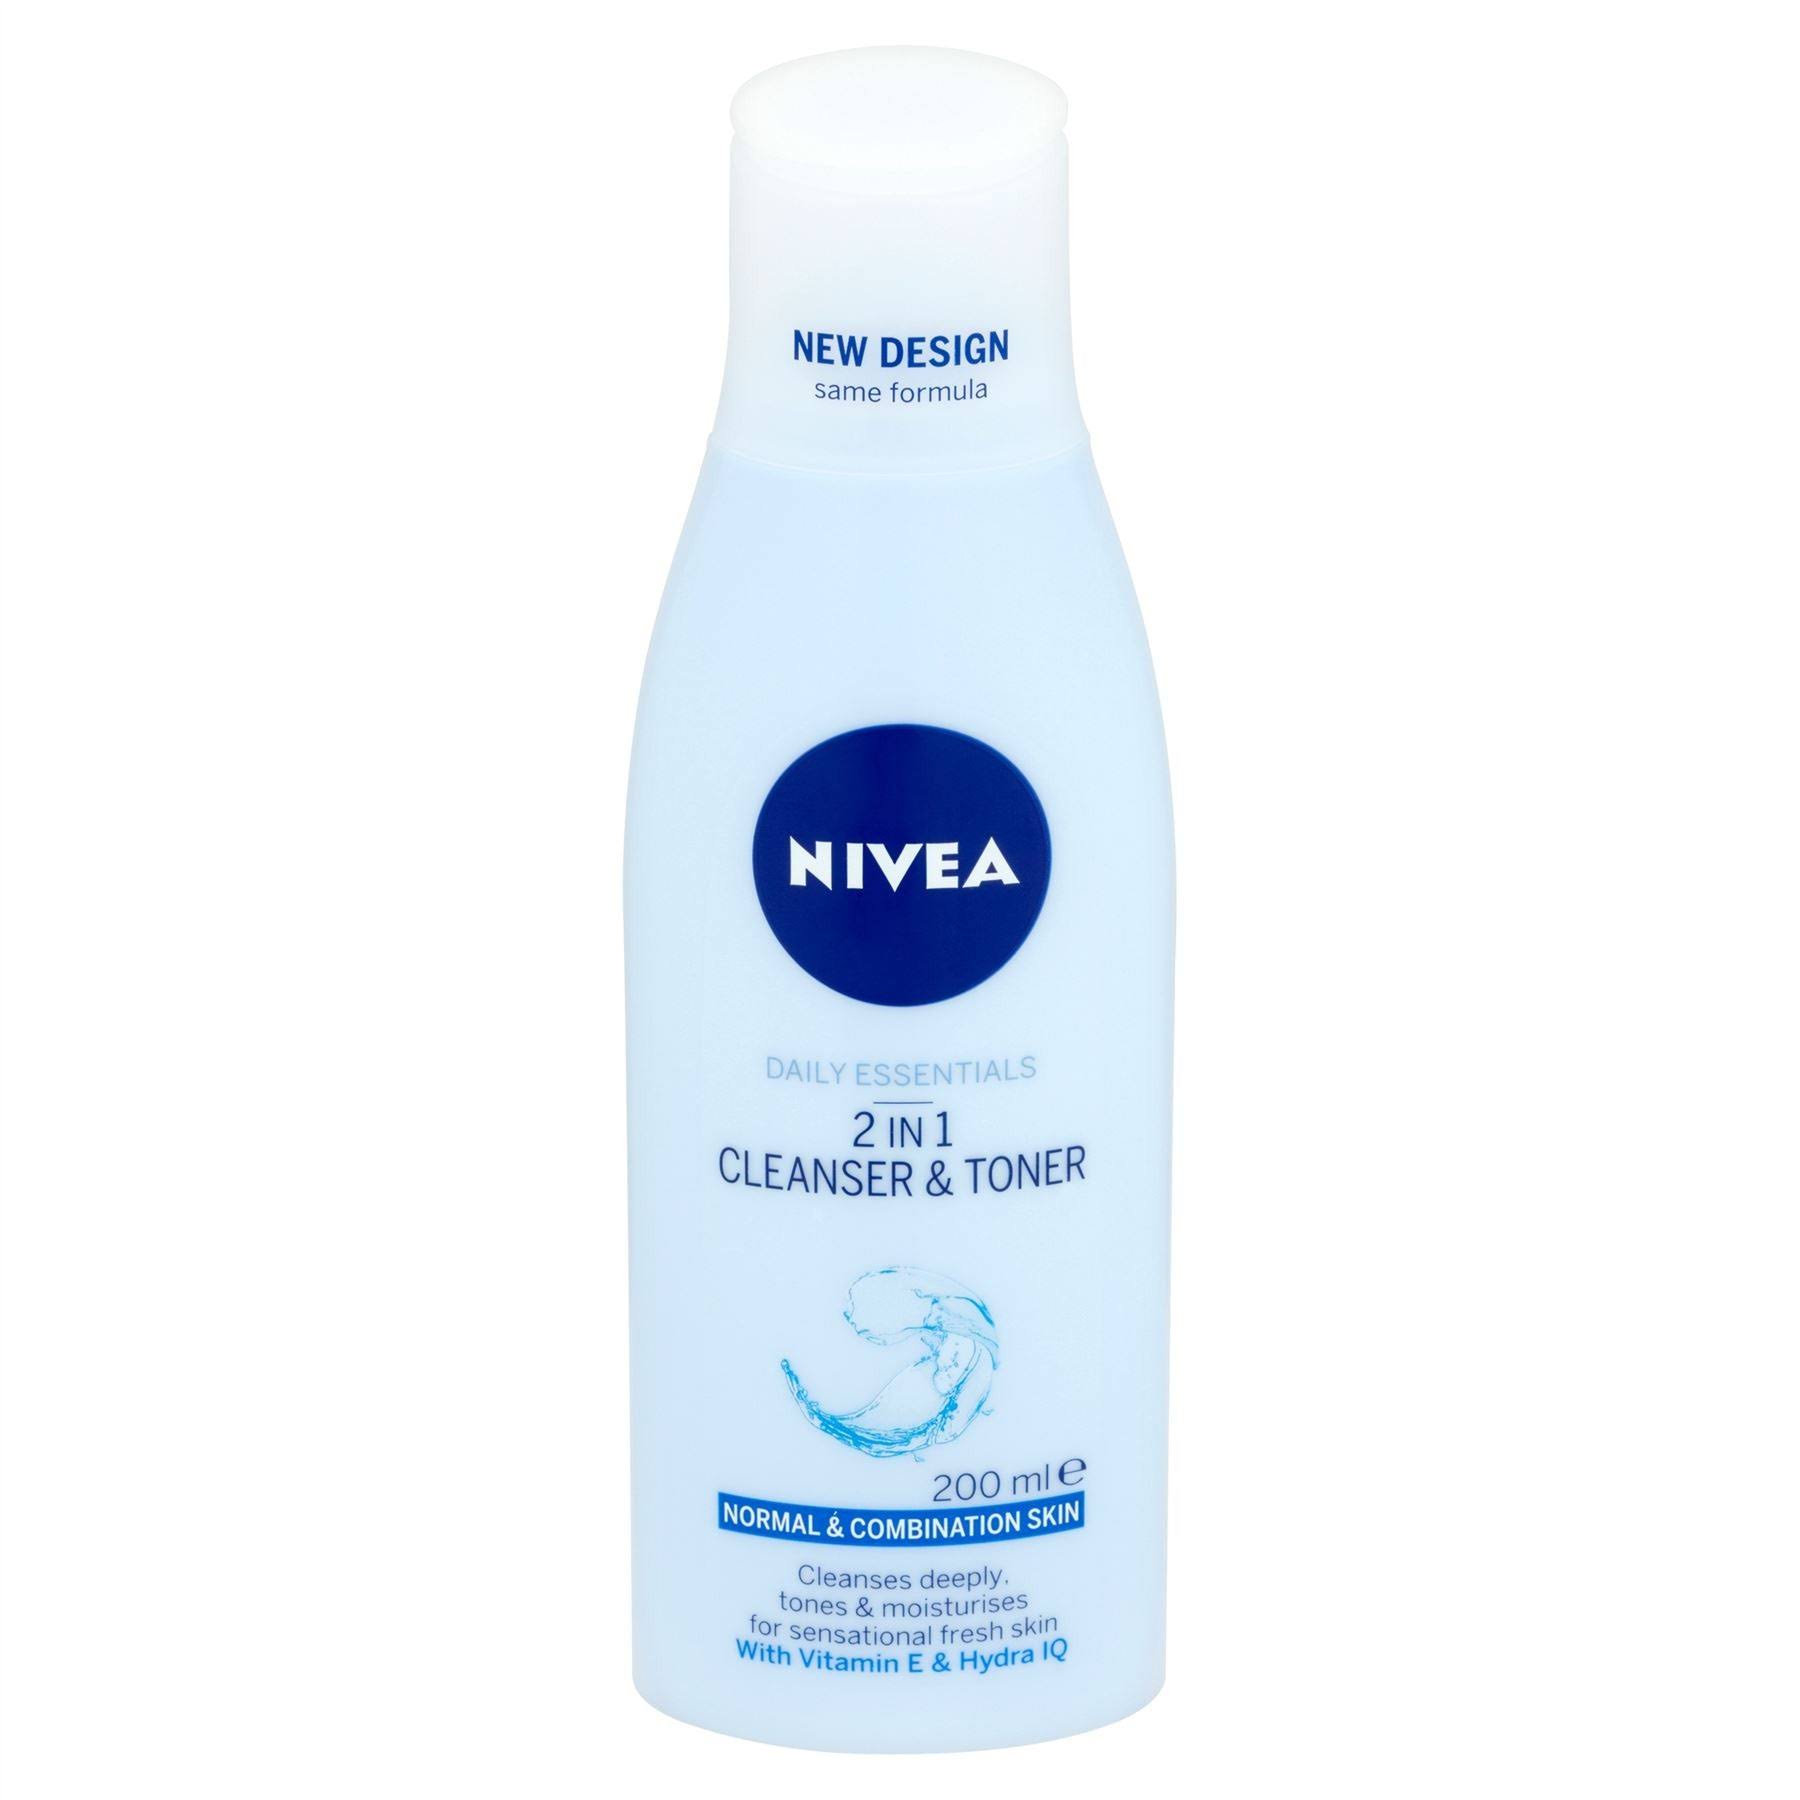 Nivea Daily Essentials 2 in 1 Cleanser & Toner - 200ml